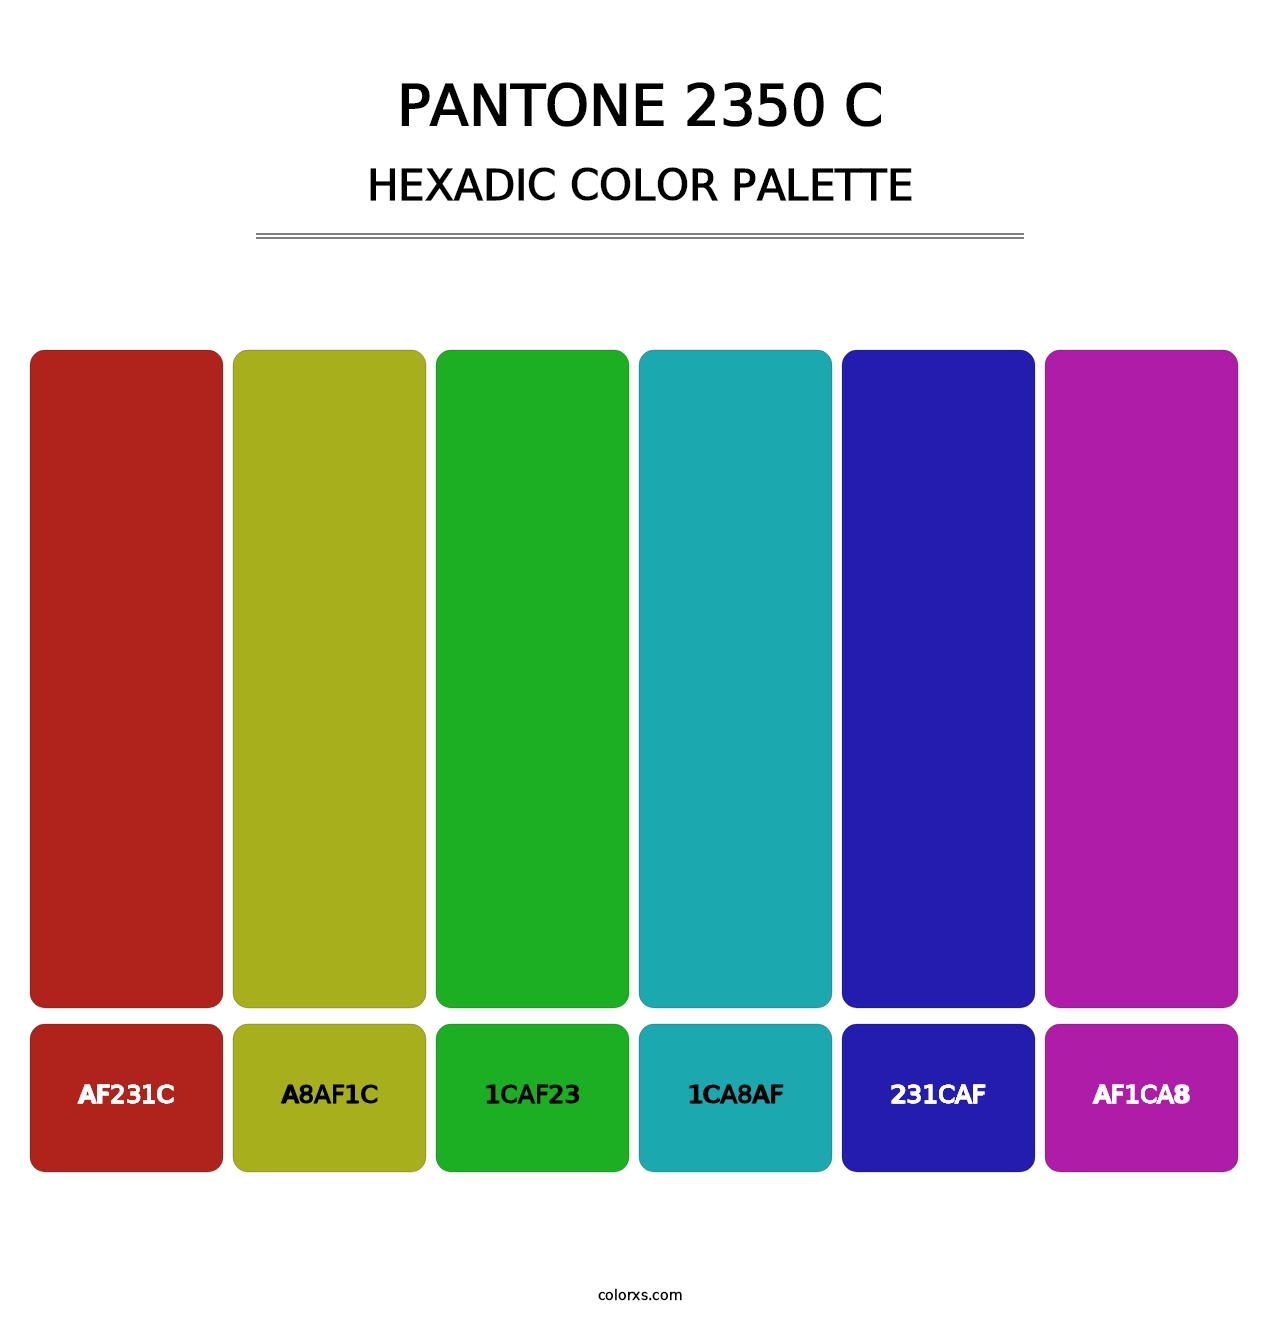 PANTONE 2350 C - Hexadic Color Palette